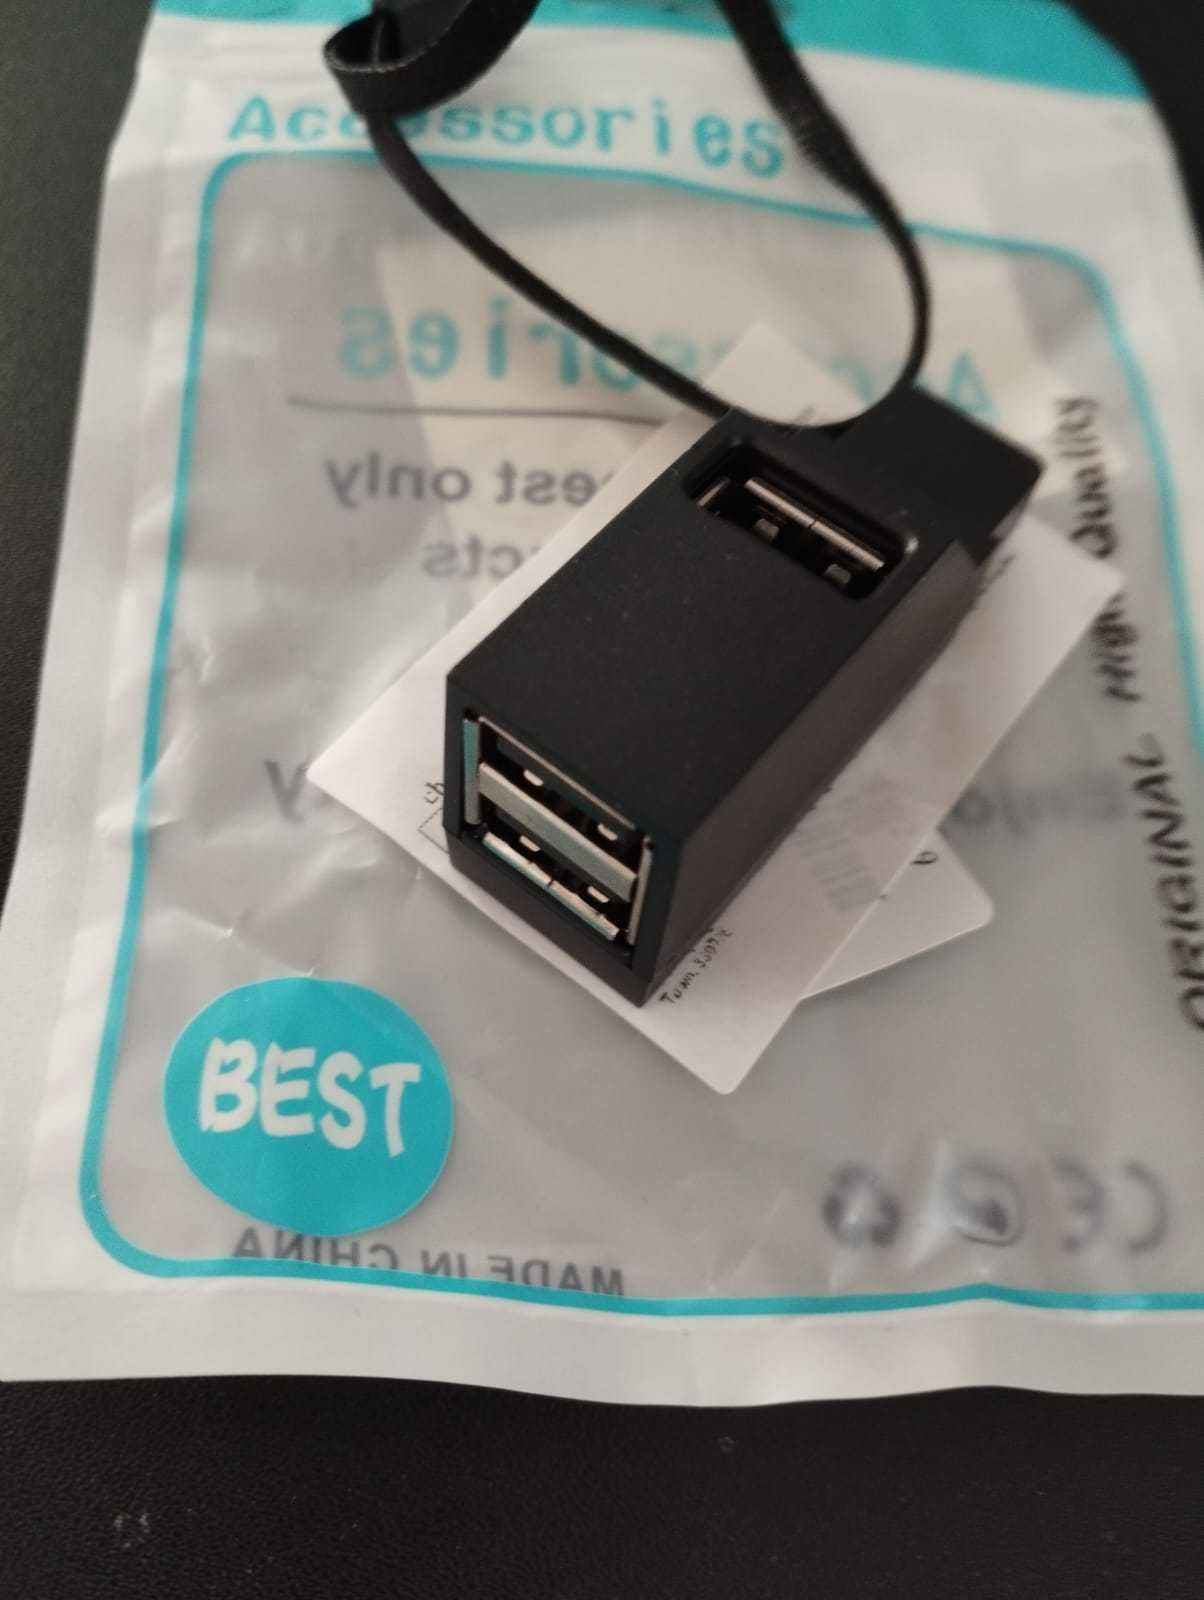 Splitter USB 2.0 Hub *3 saidas*